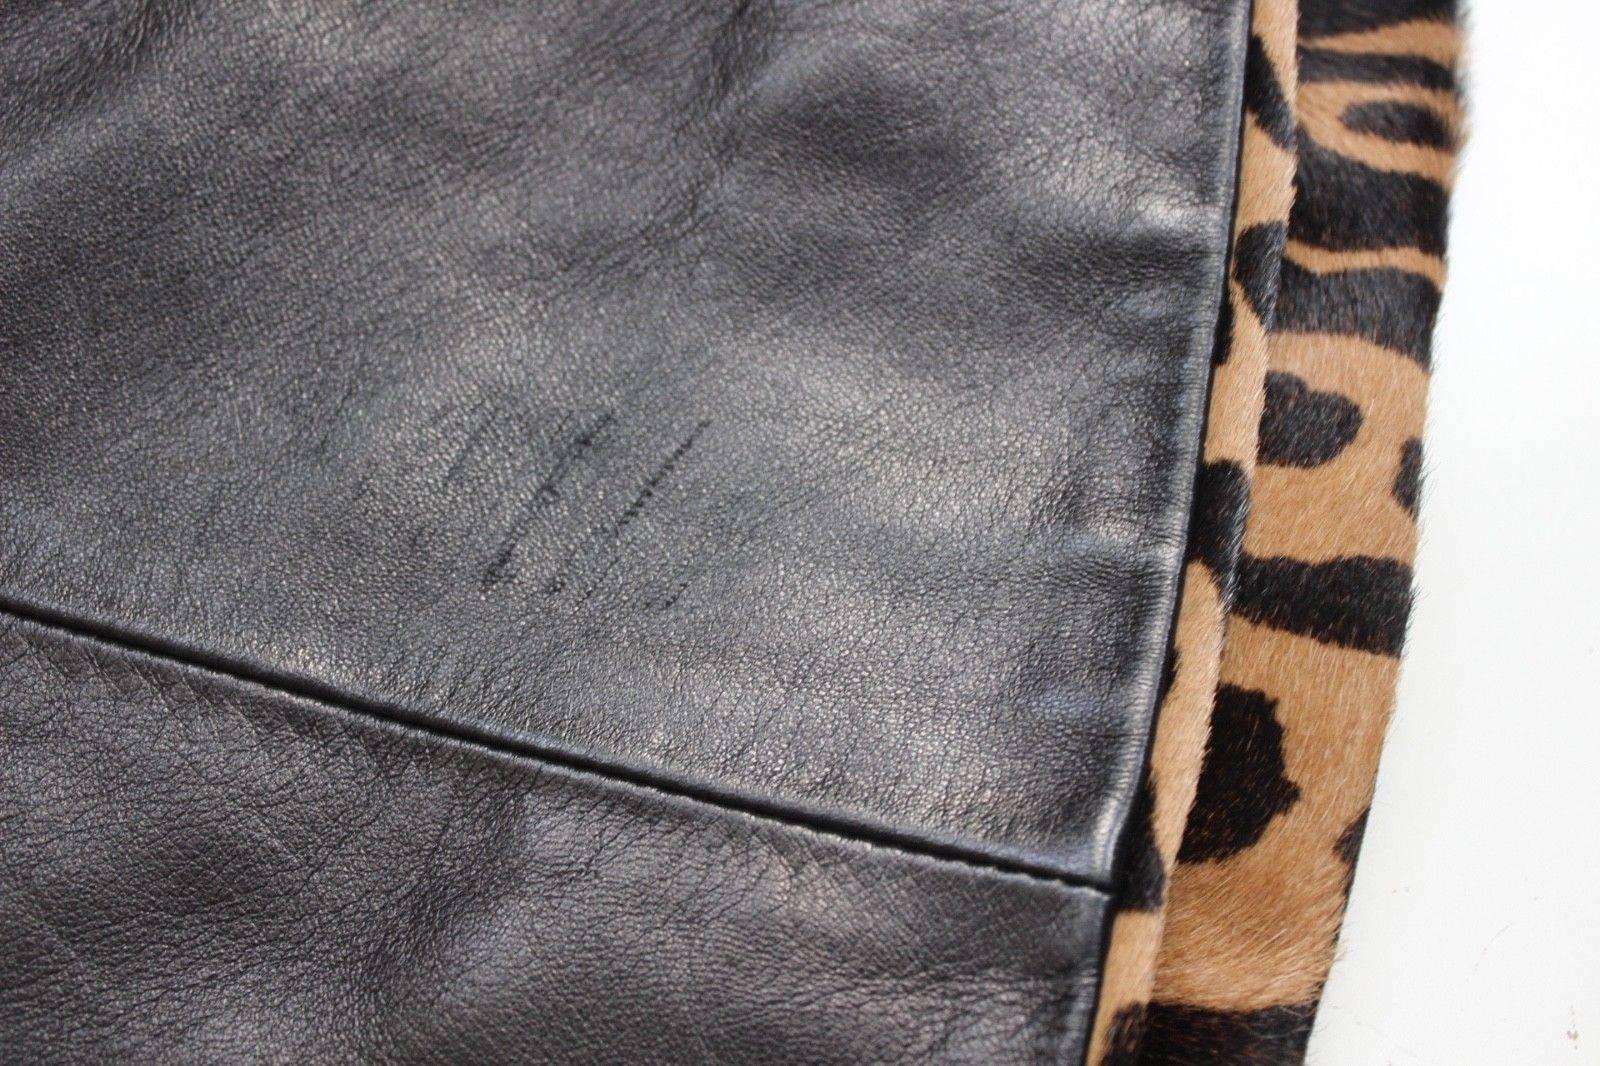 Jitrois Black Leather Leopard Fur Trim Jacket 40 uk 12 Black leather jacket with For Sale 6